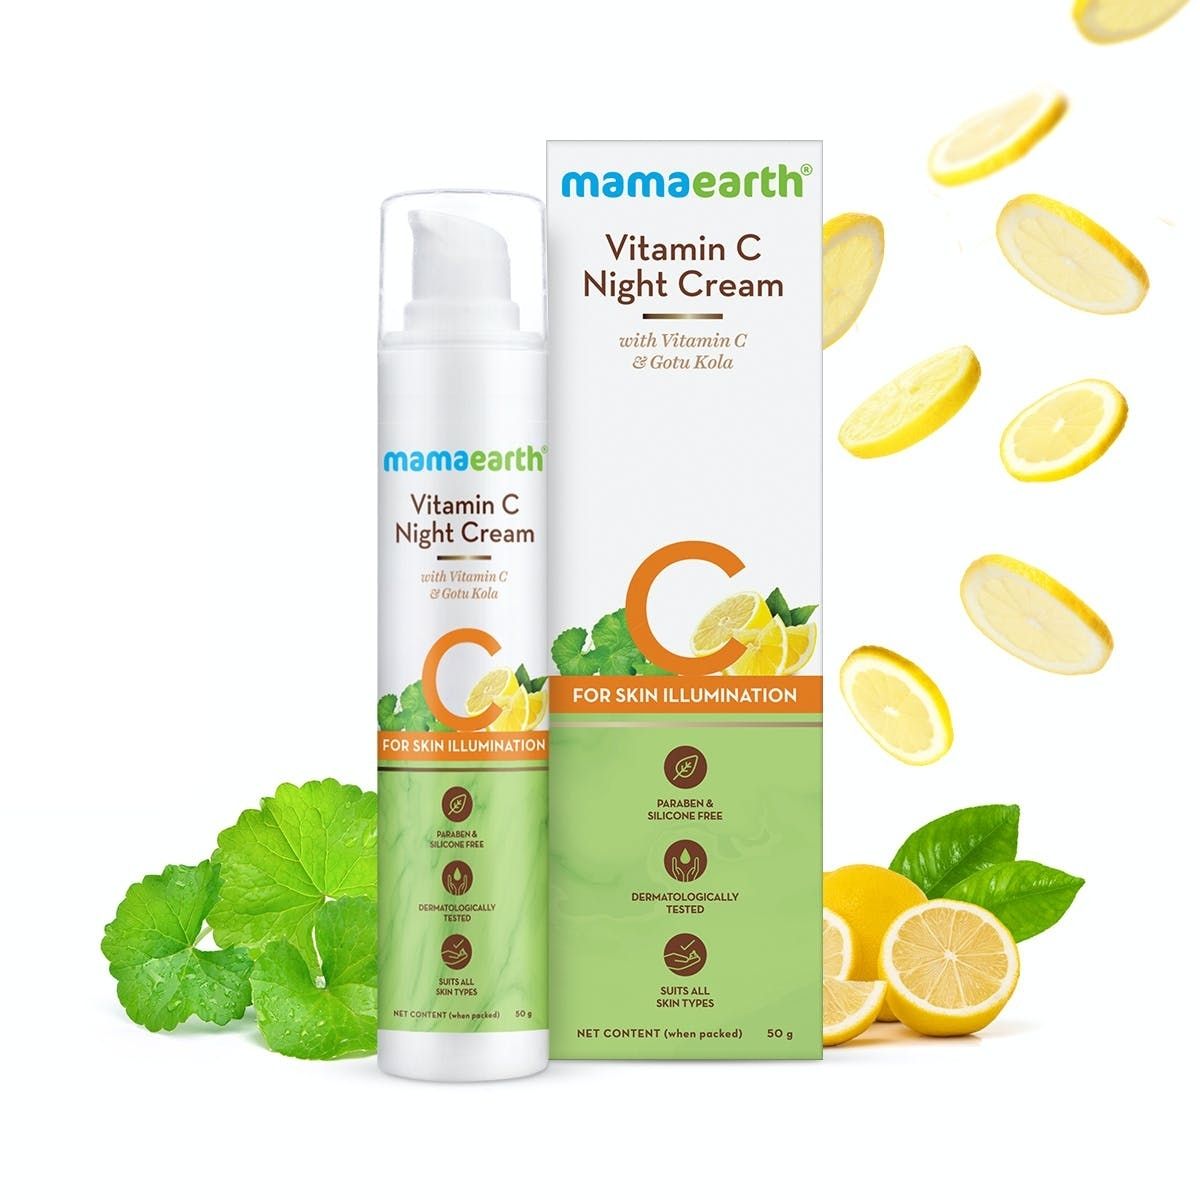 Mamaearth Vitamin C Night Cream With Vitamin C And Gotu kola For Skin Illumination, 50g